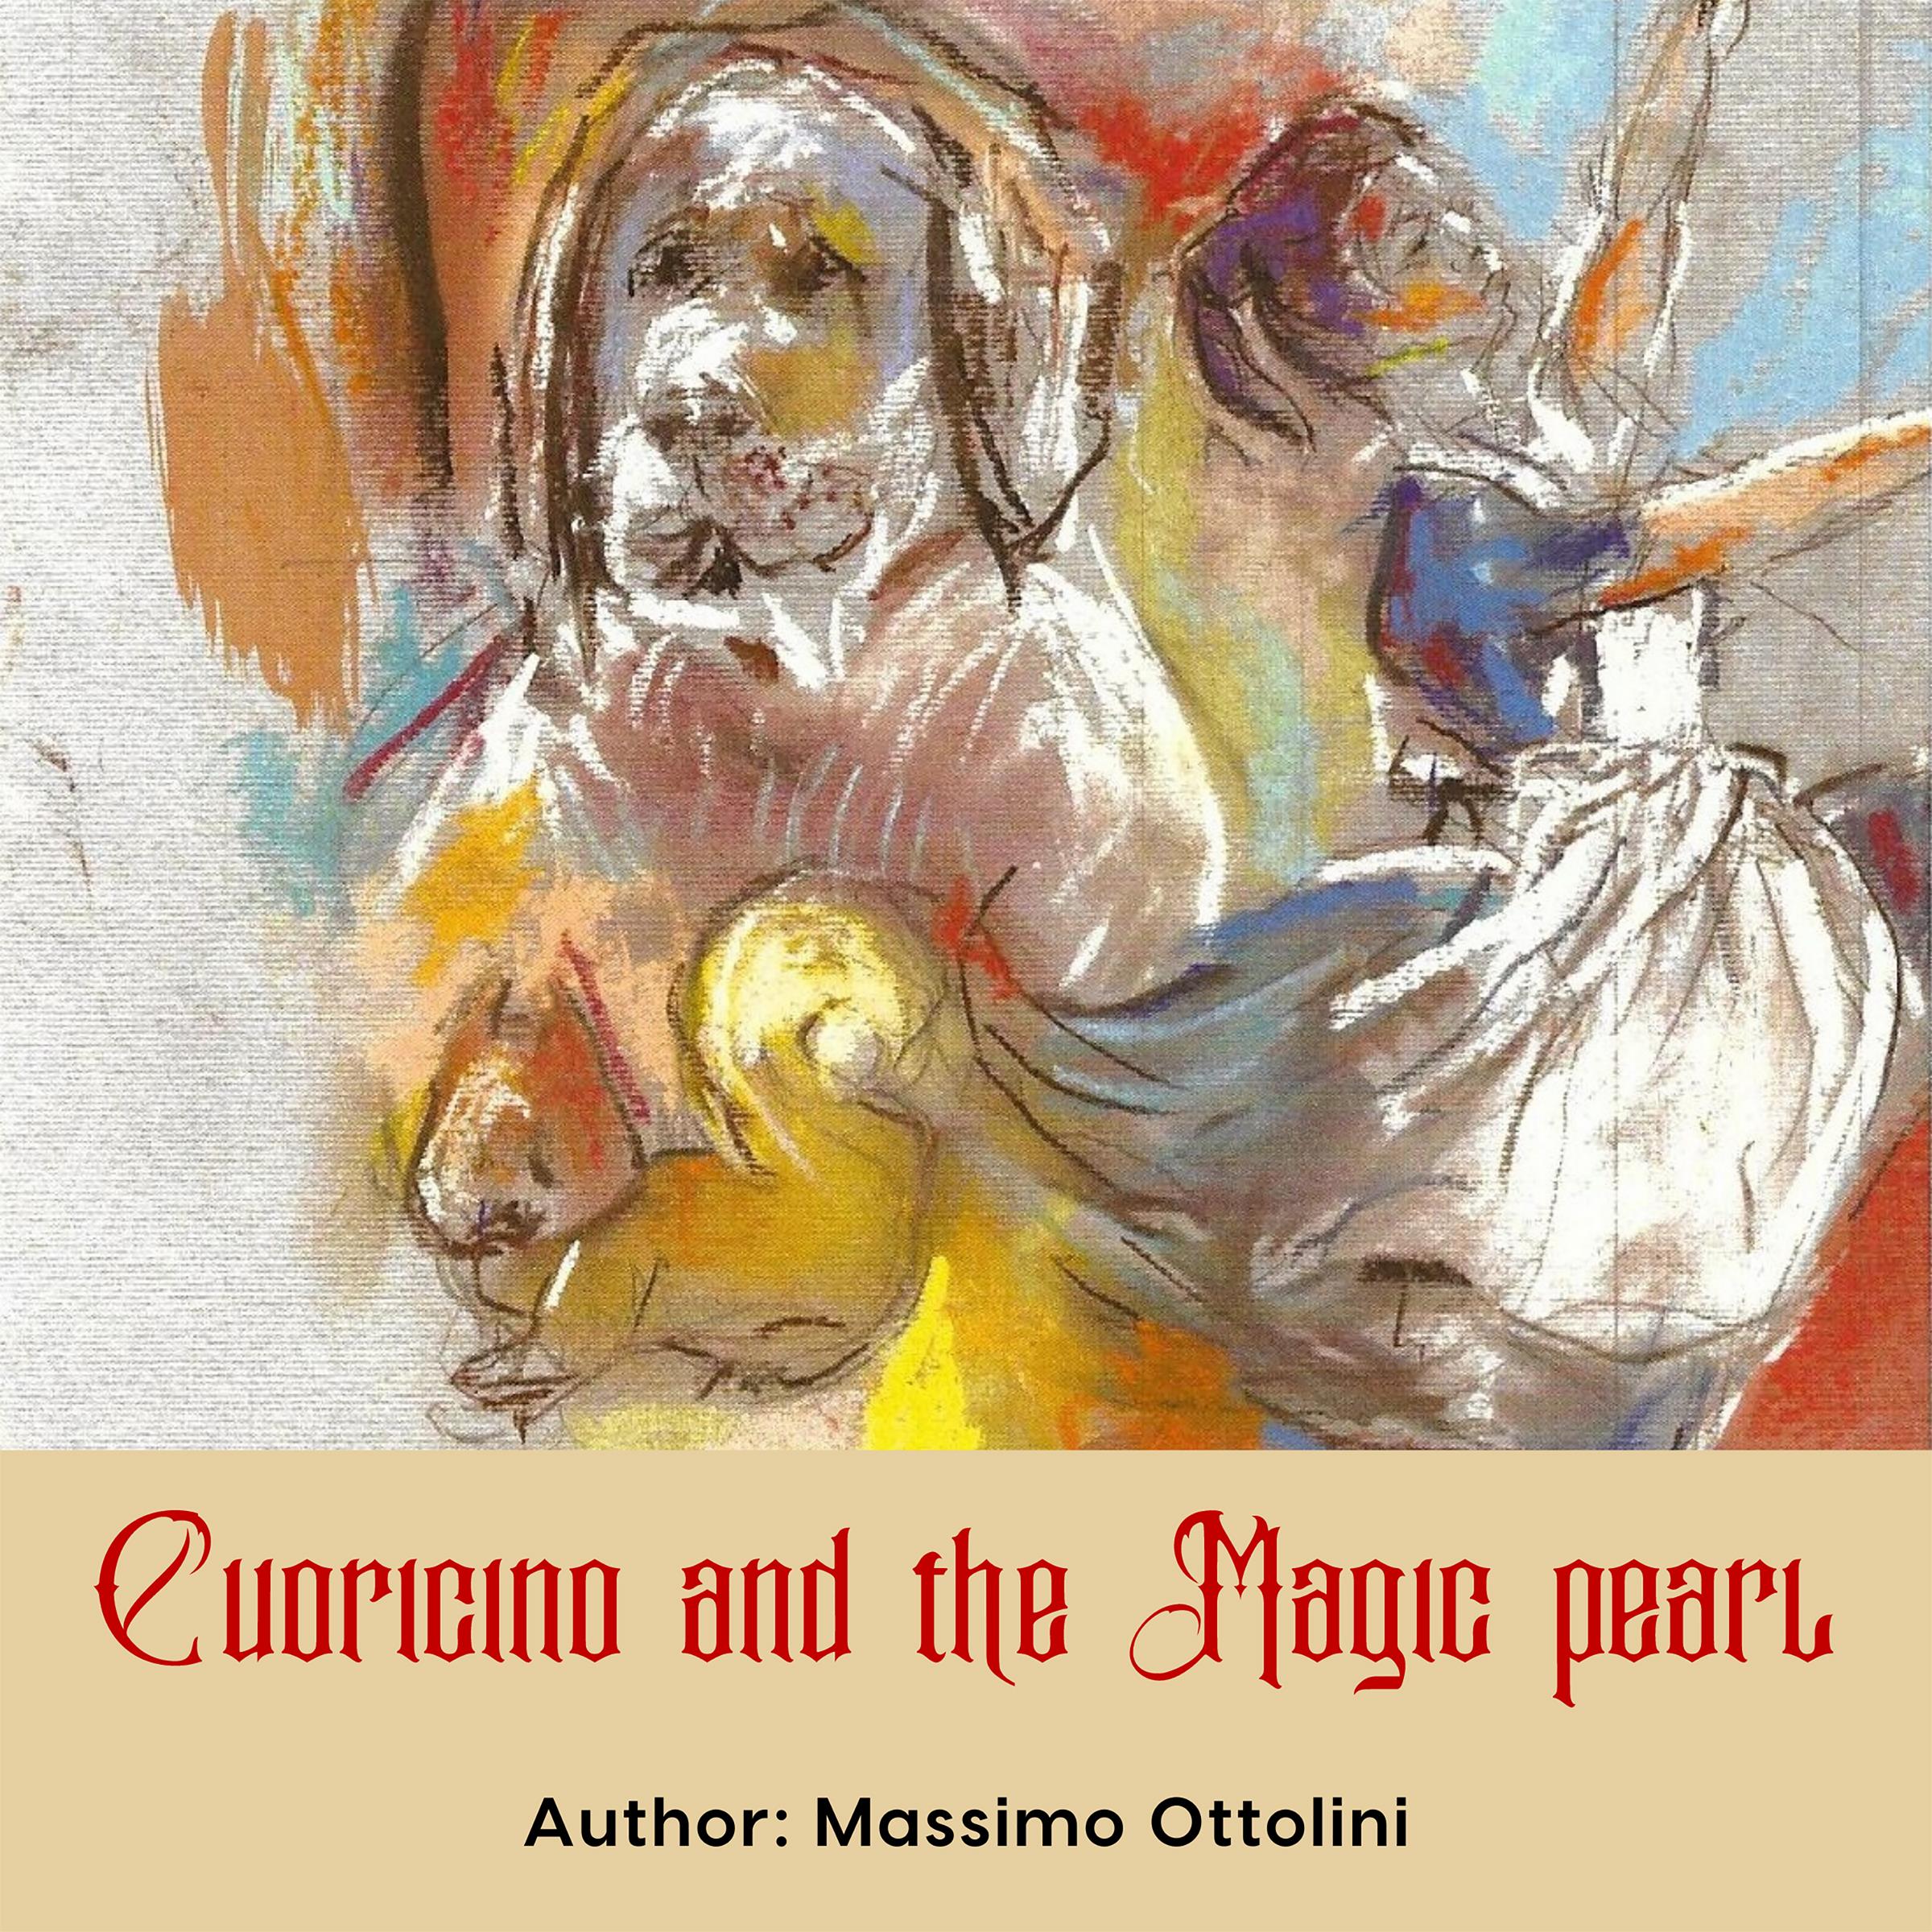 Cuoricino and the magic pearl